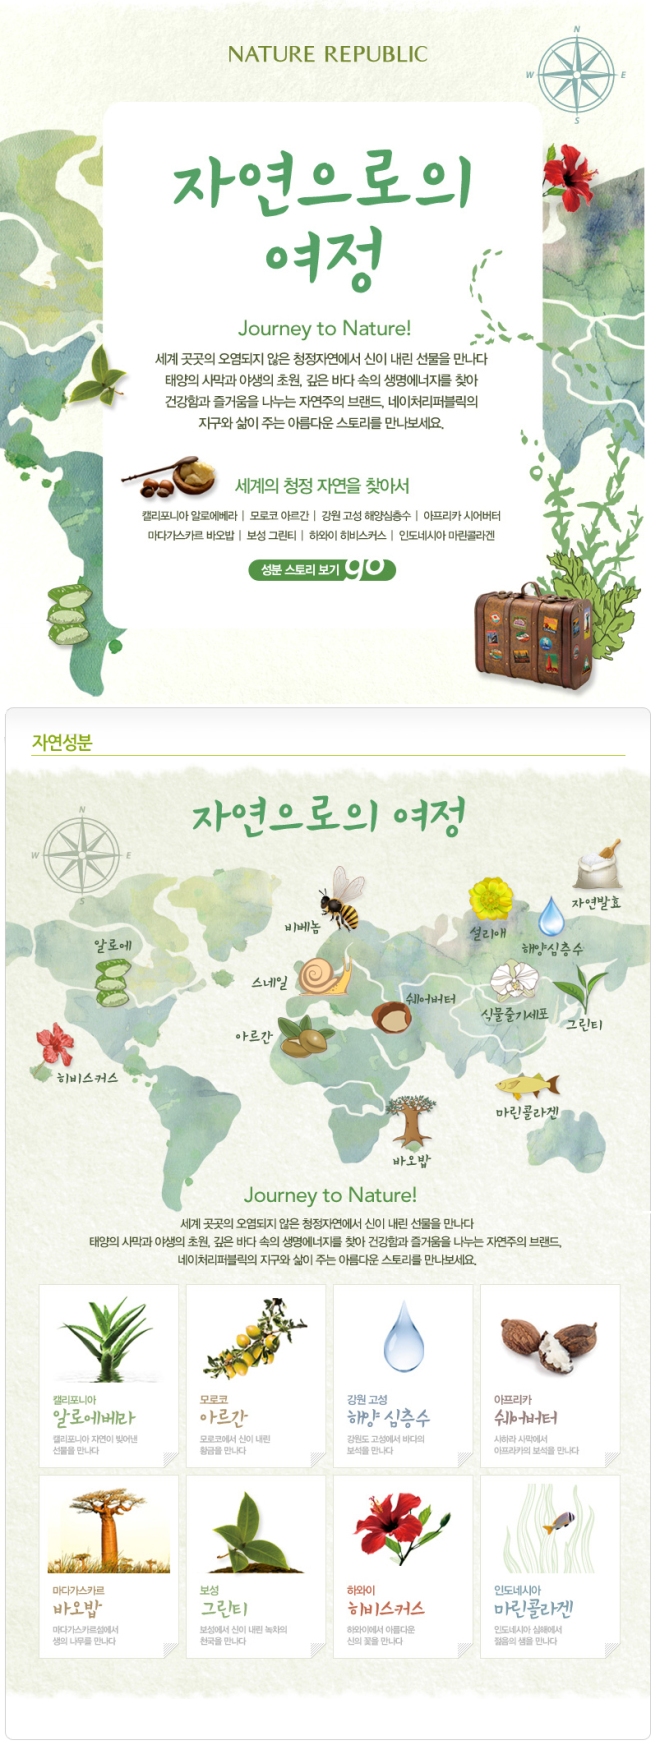 Credit: Nature Republic Korea website